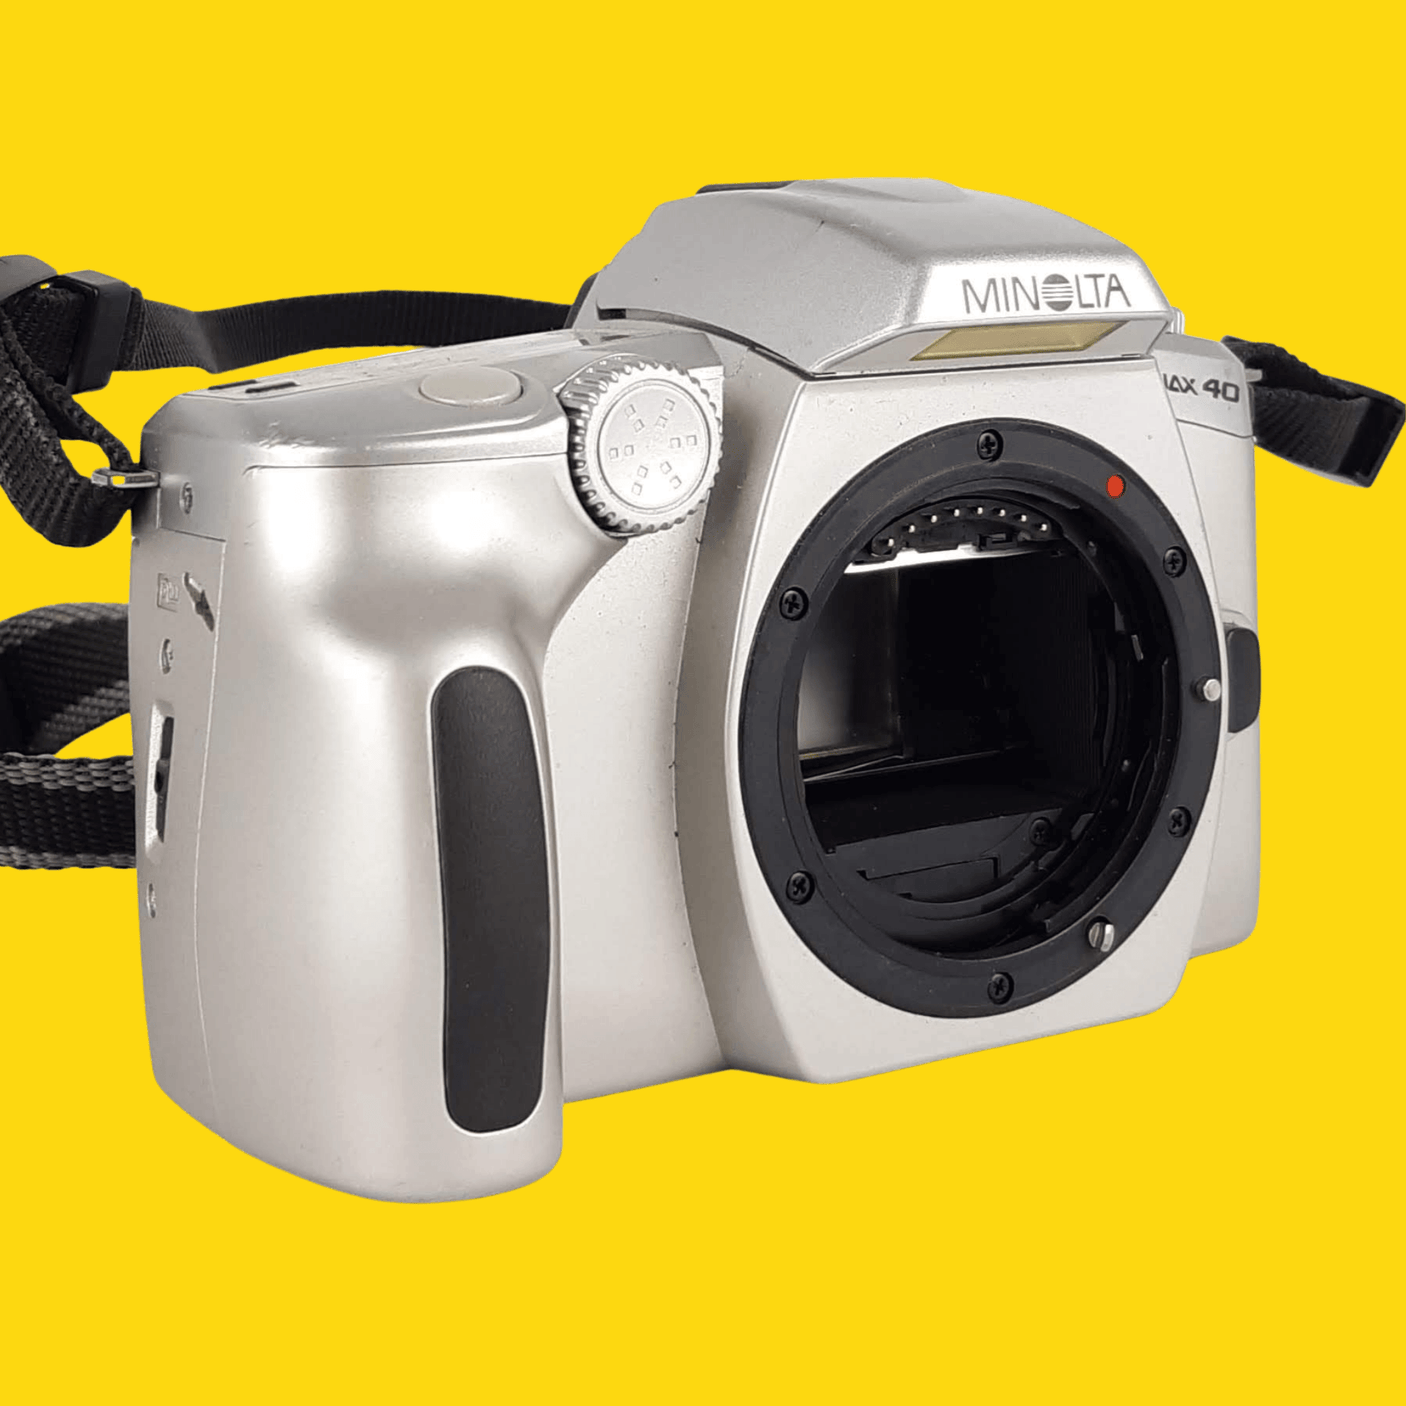 Minolta Dynax 40 Automatic 35mm SLR Film Camera - Body Only